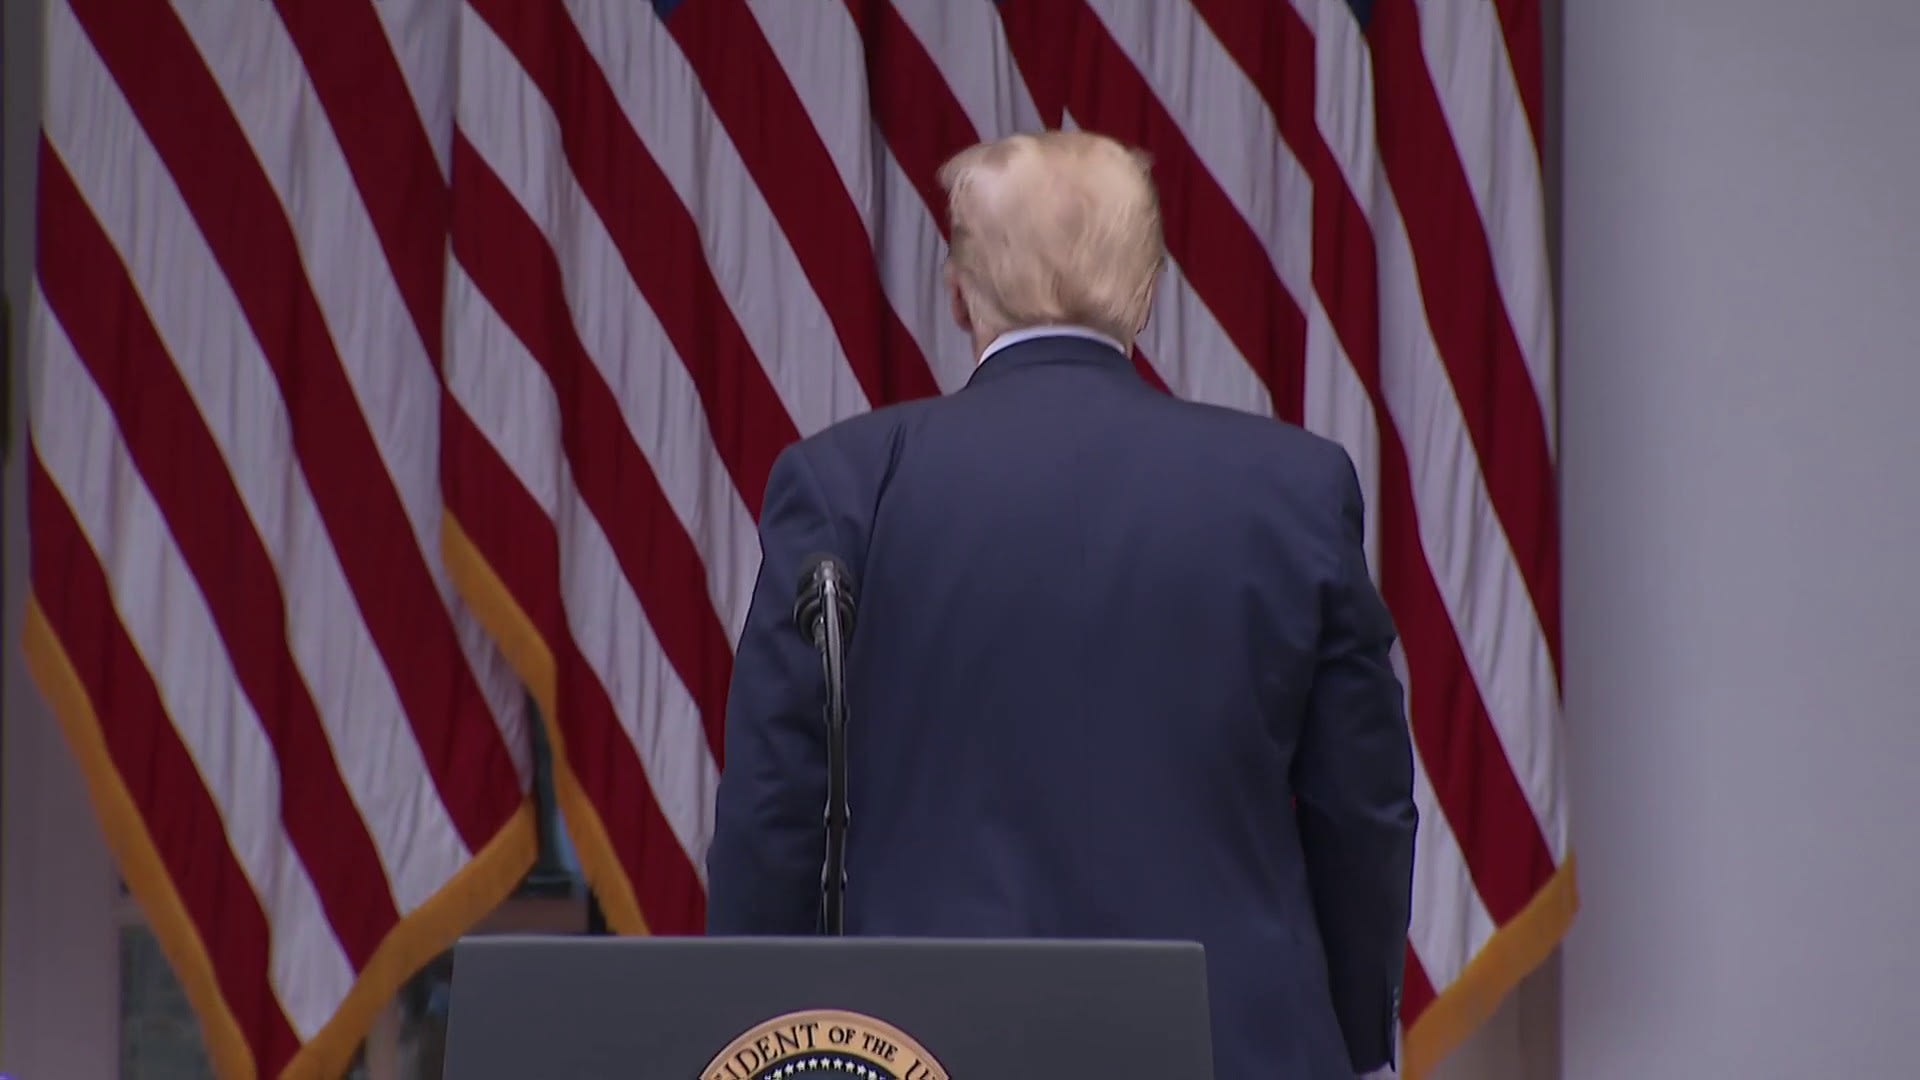 Trumps Left The Press Conference When The Female Reporter Altercation